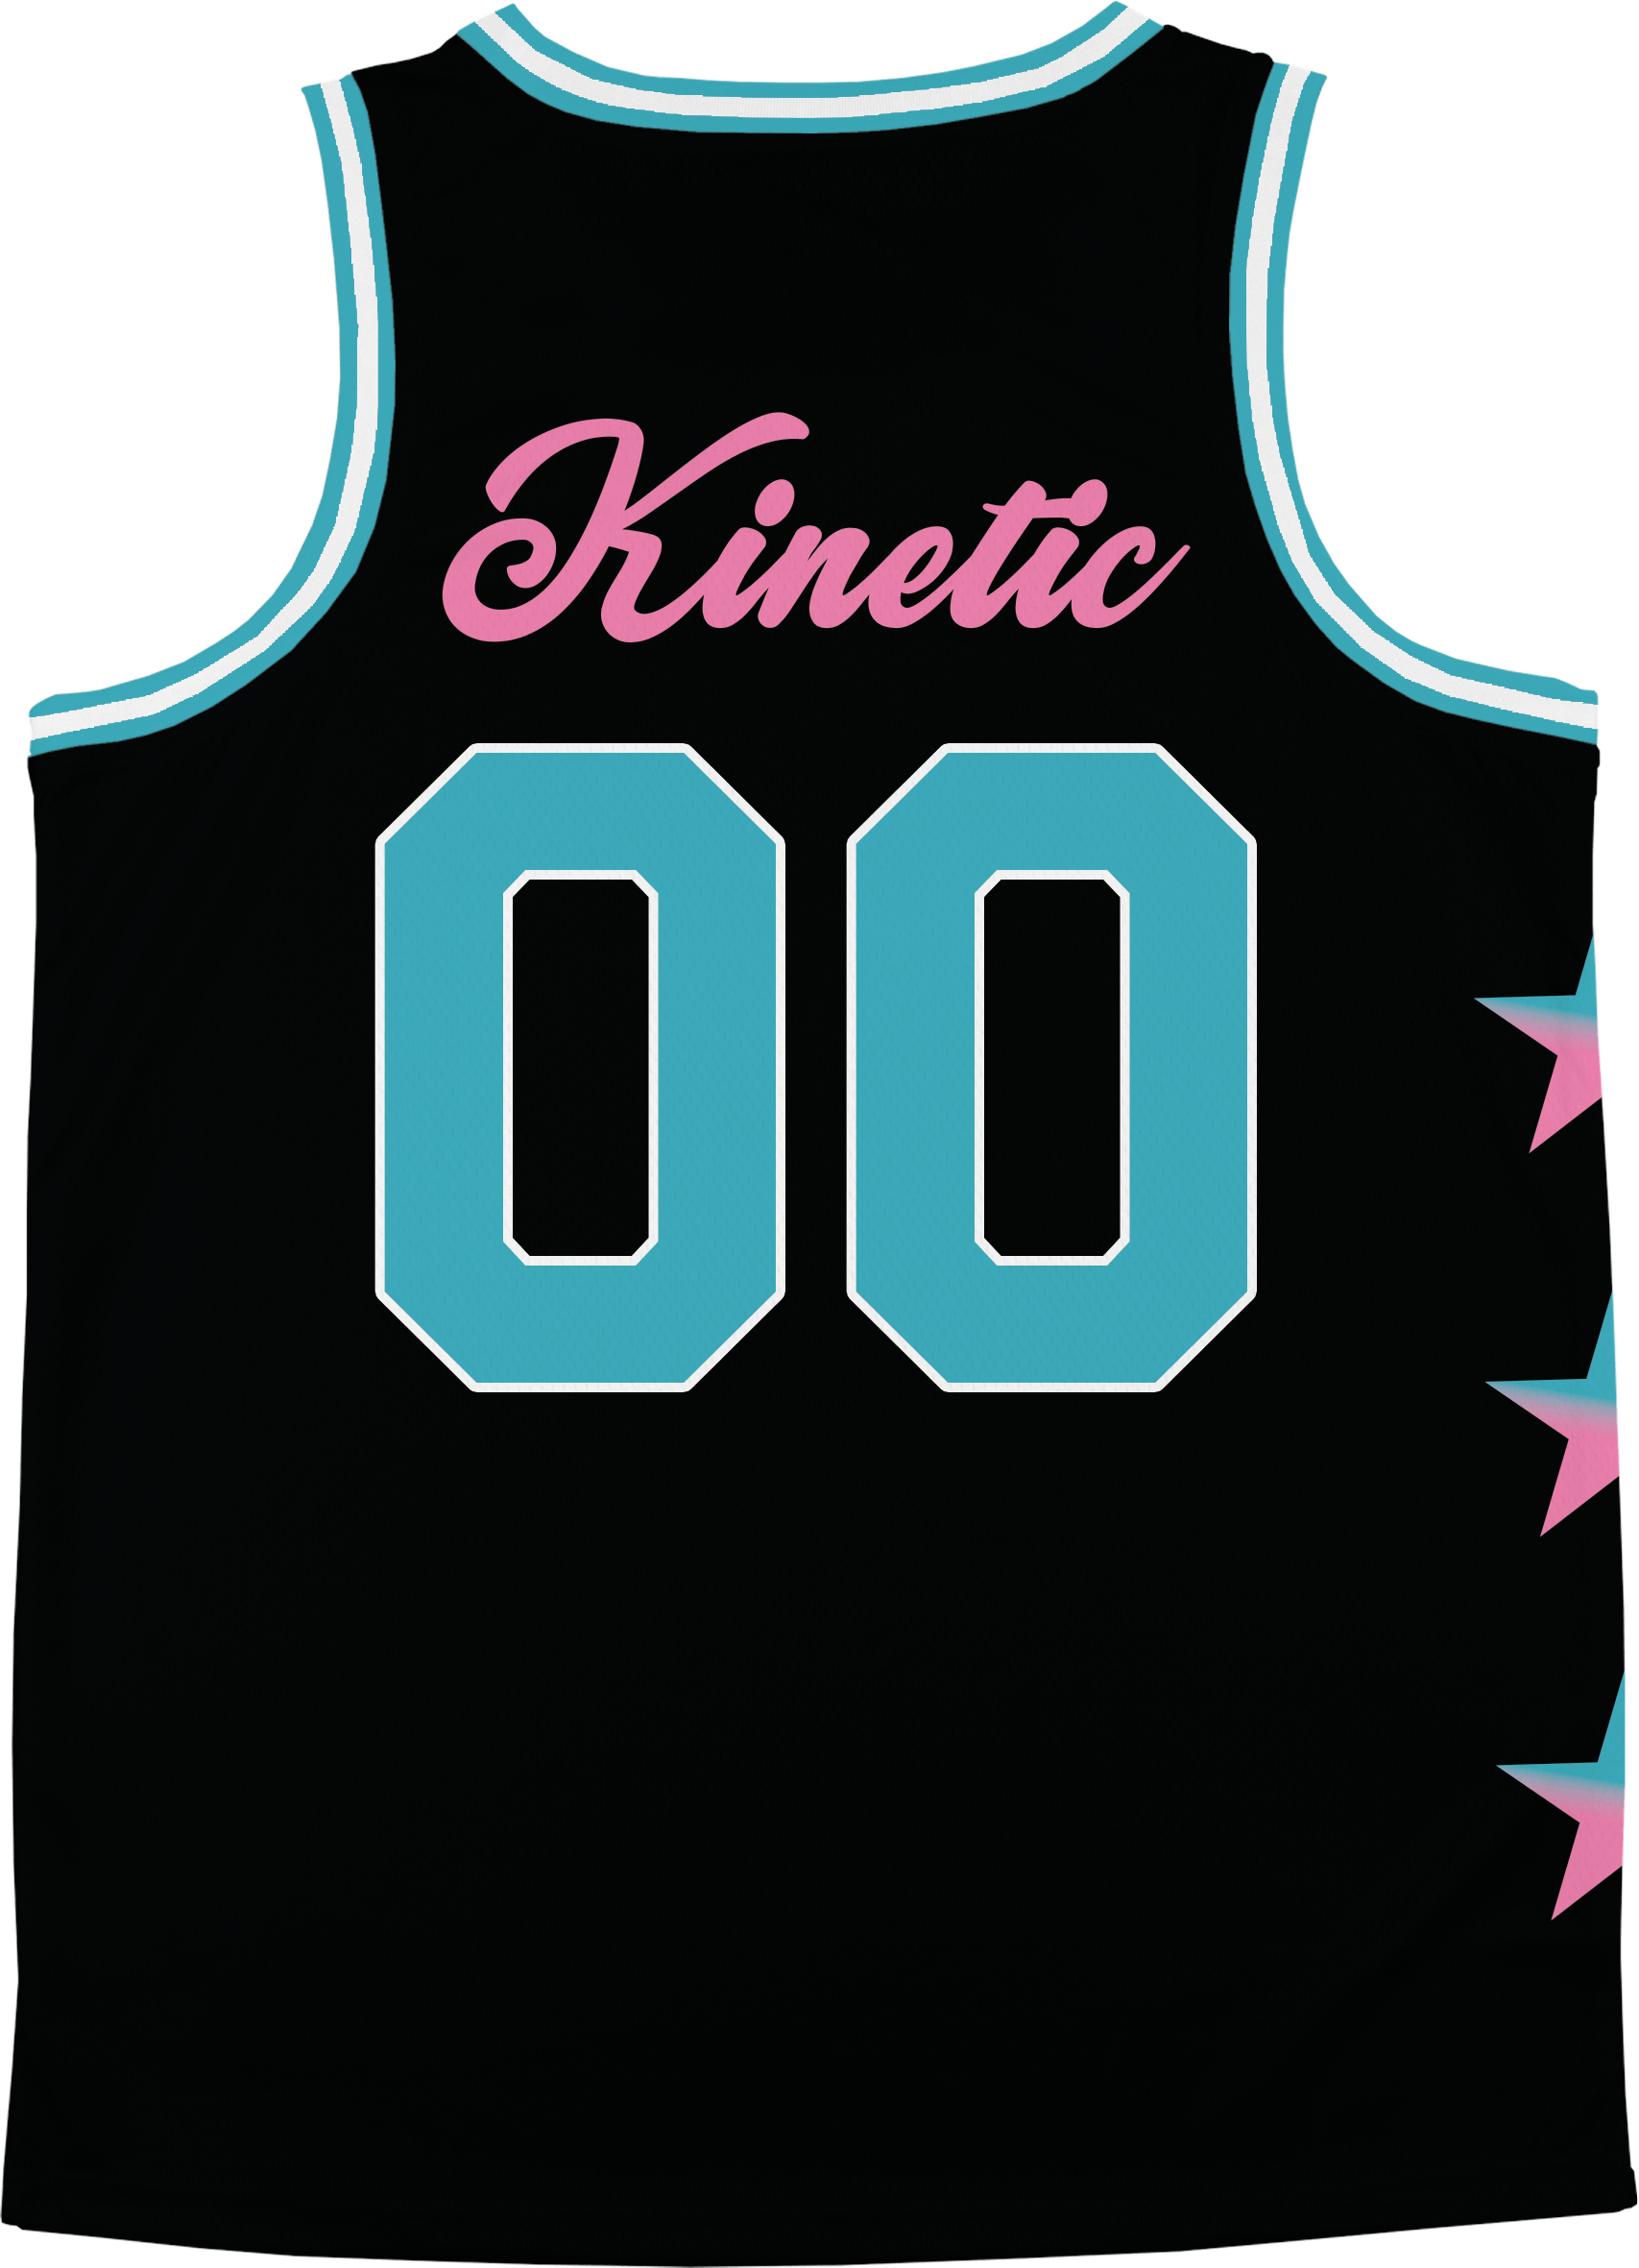 Theta Chi - Cotton Candy Basketball Jersey - Kinetic Society